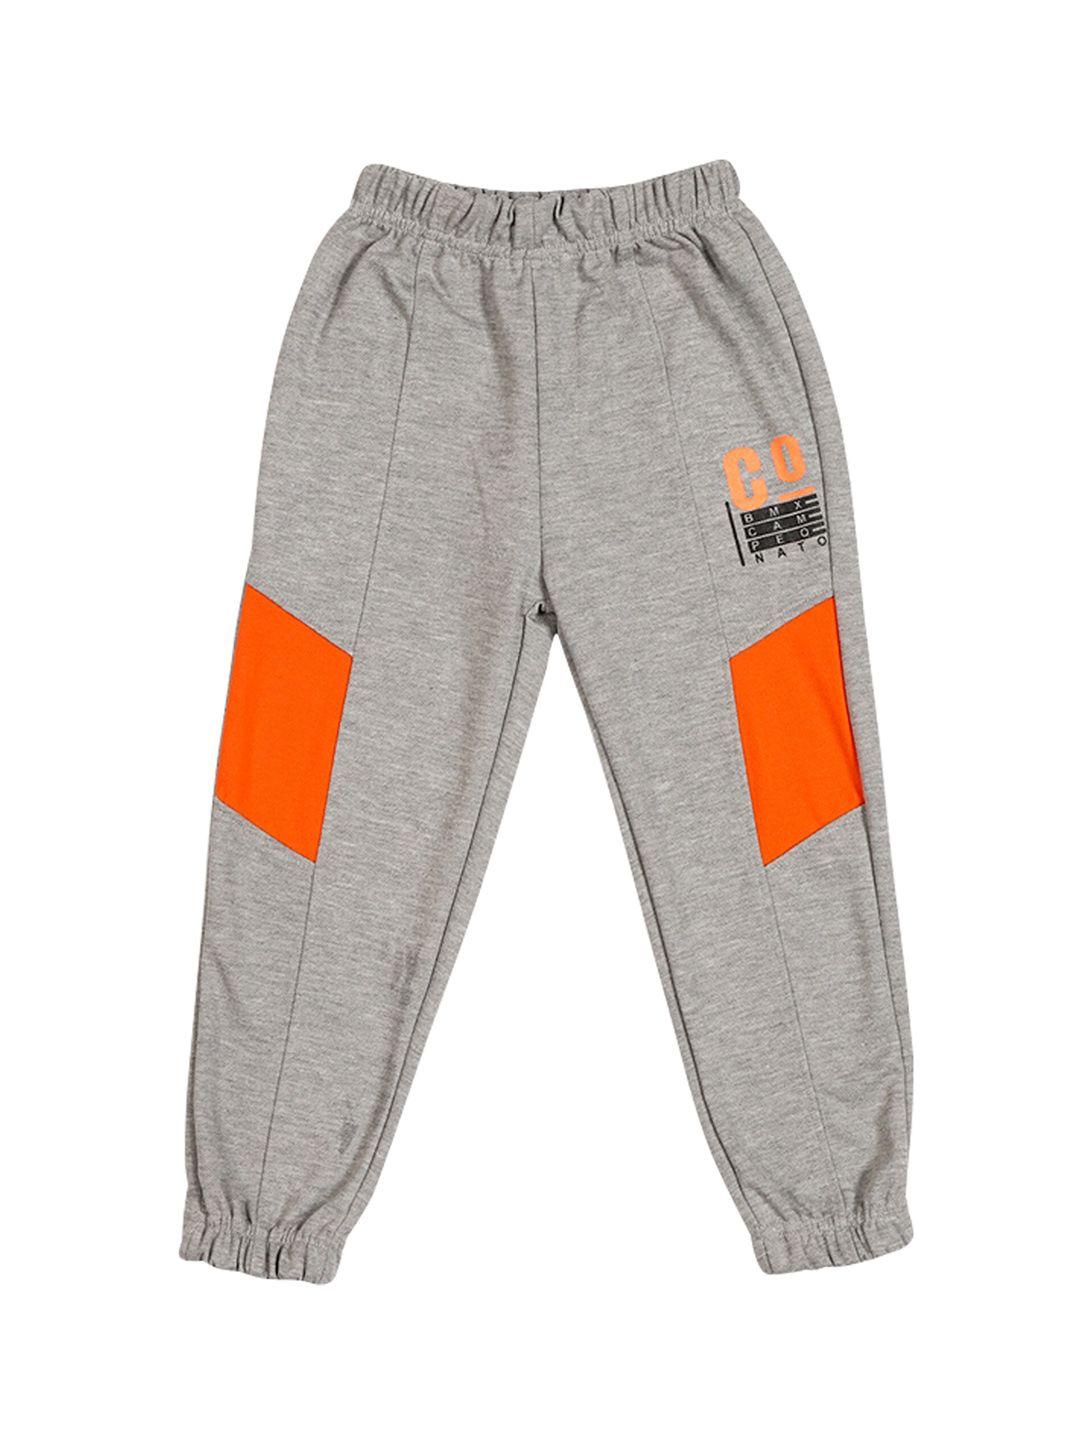 cremlin clothing boys grey & orange colourblocked joggers